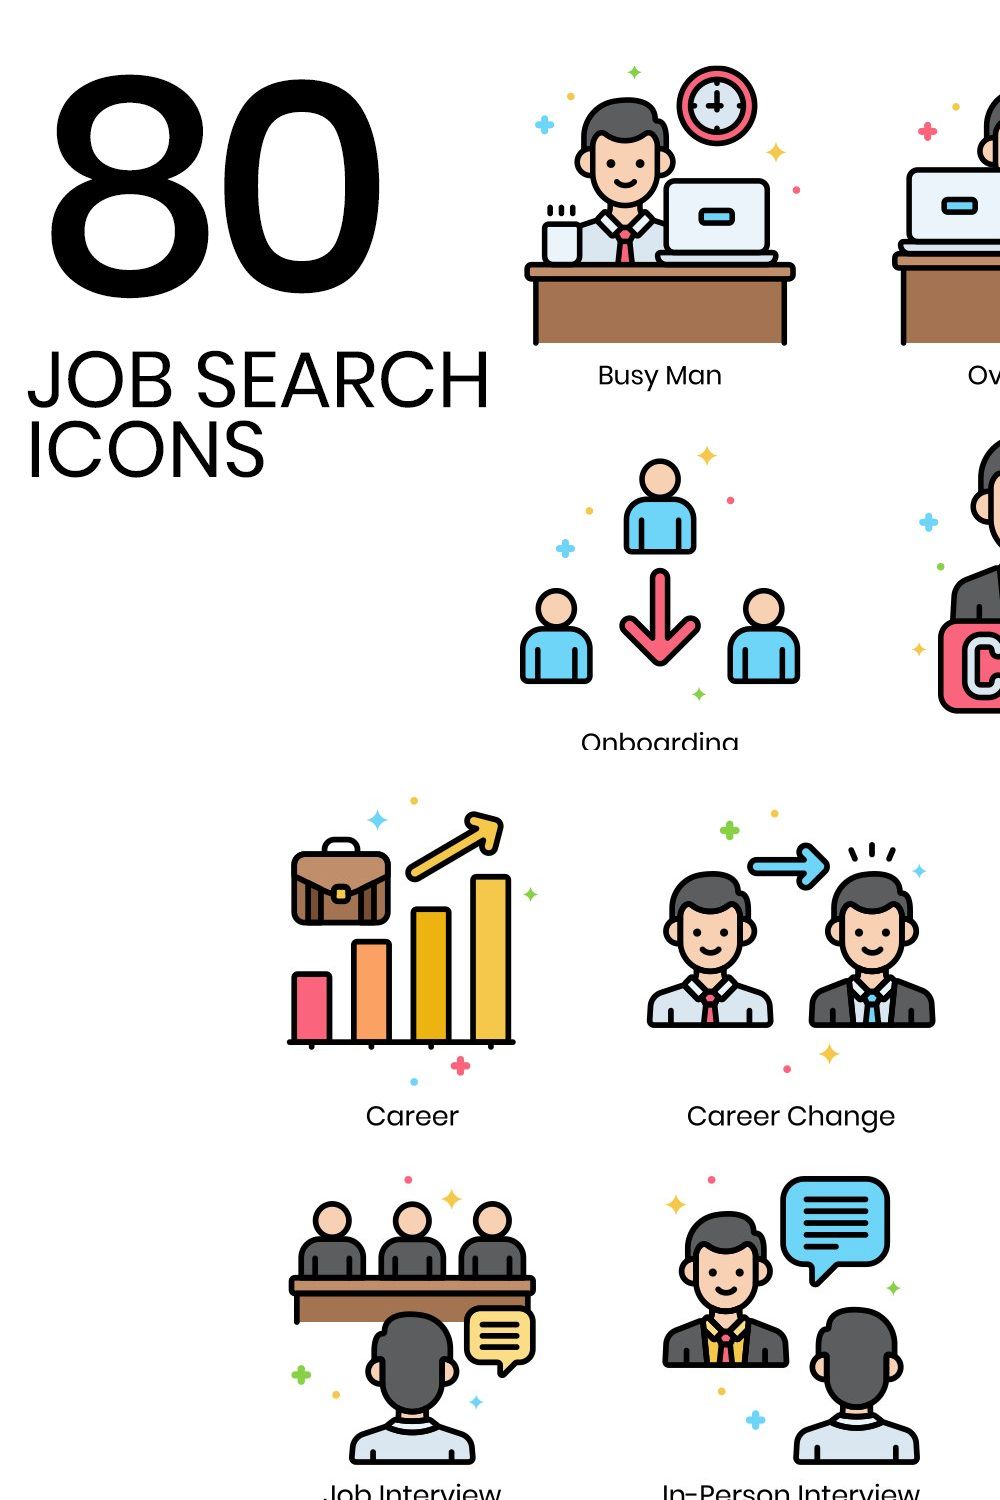 80 Job Search Icons | Vivid pinterest preview image.